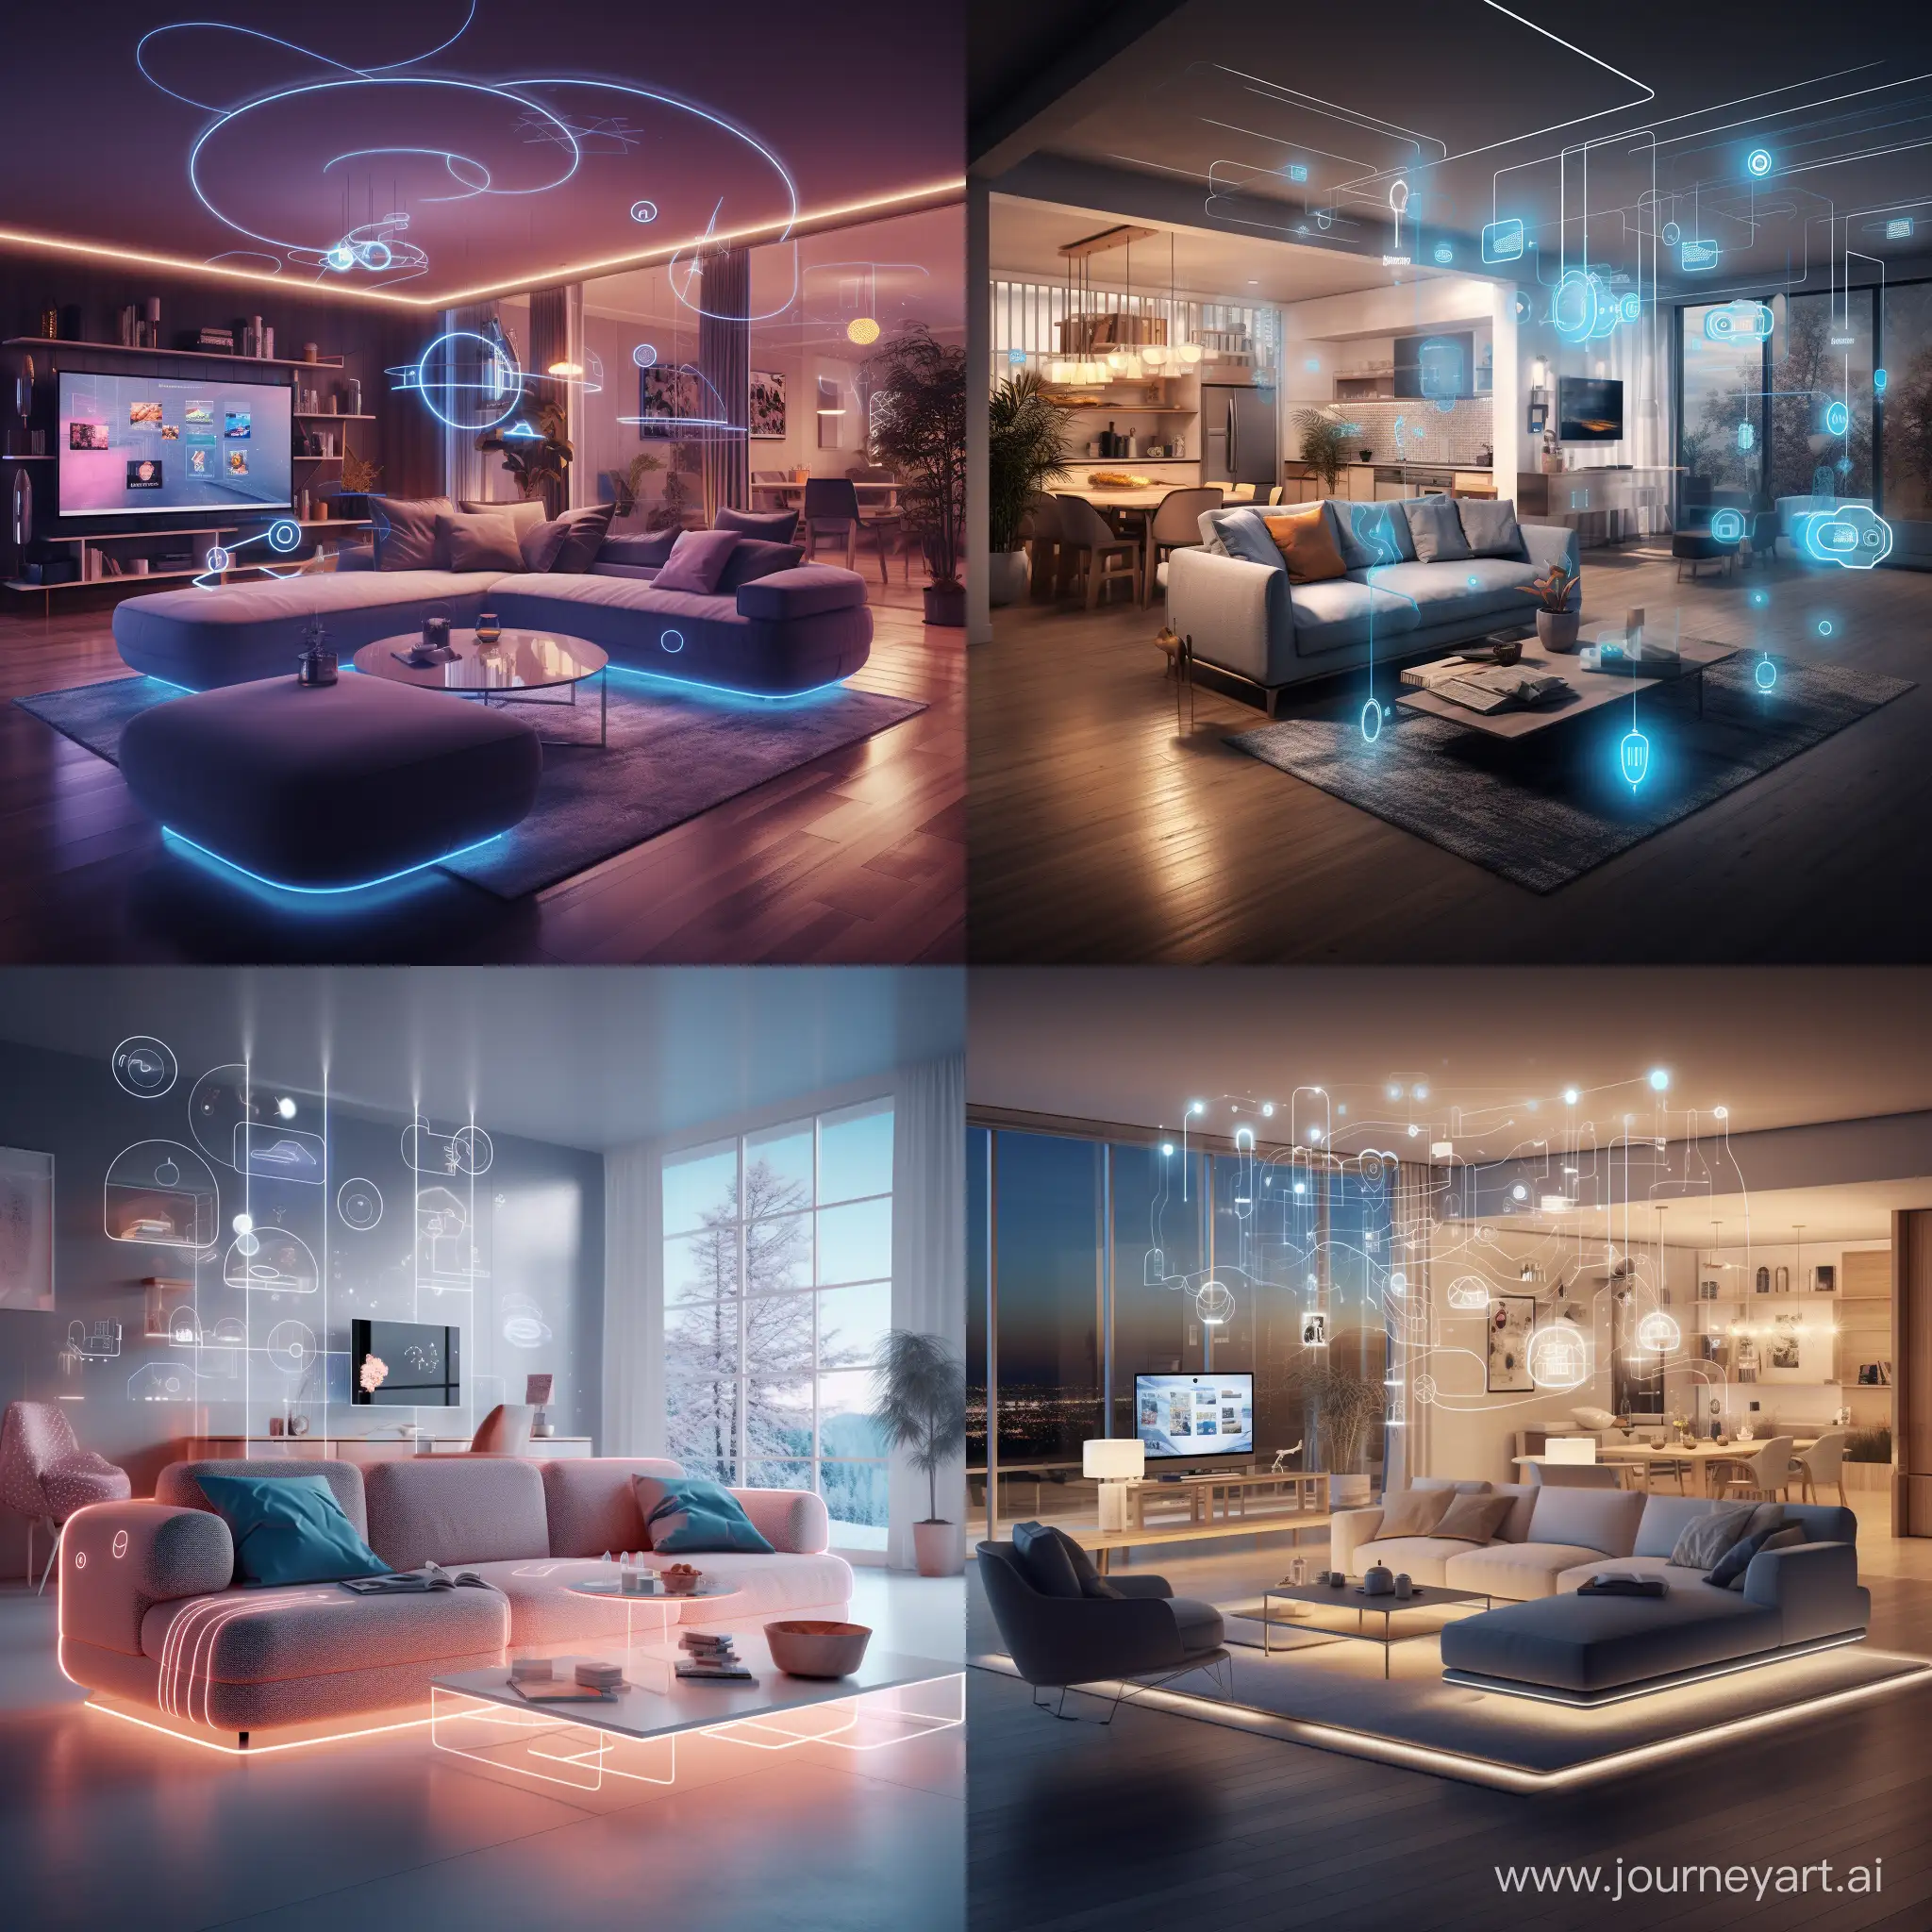 Futuristic-IoTEnabled-Smart-Home-Interior-with-AI-Integration